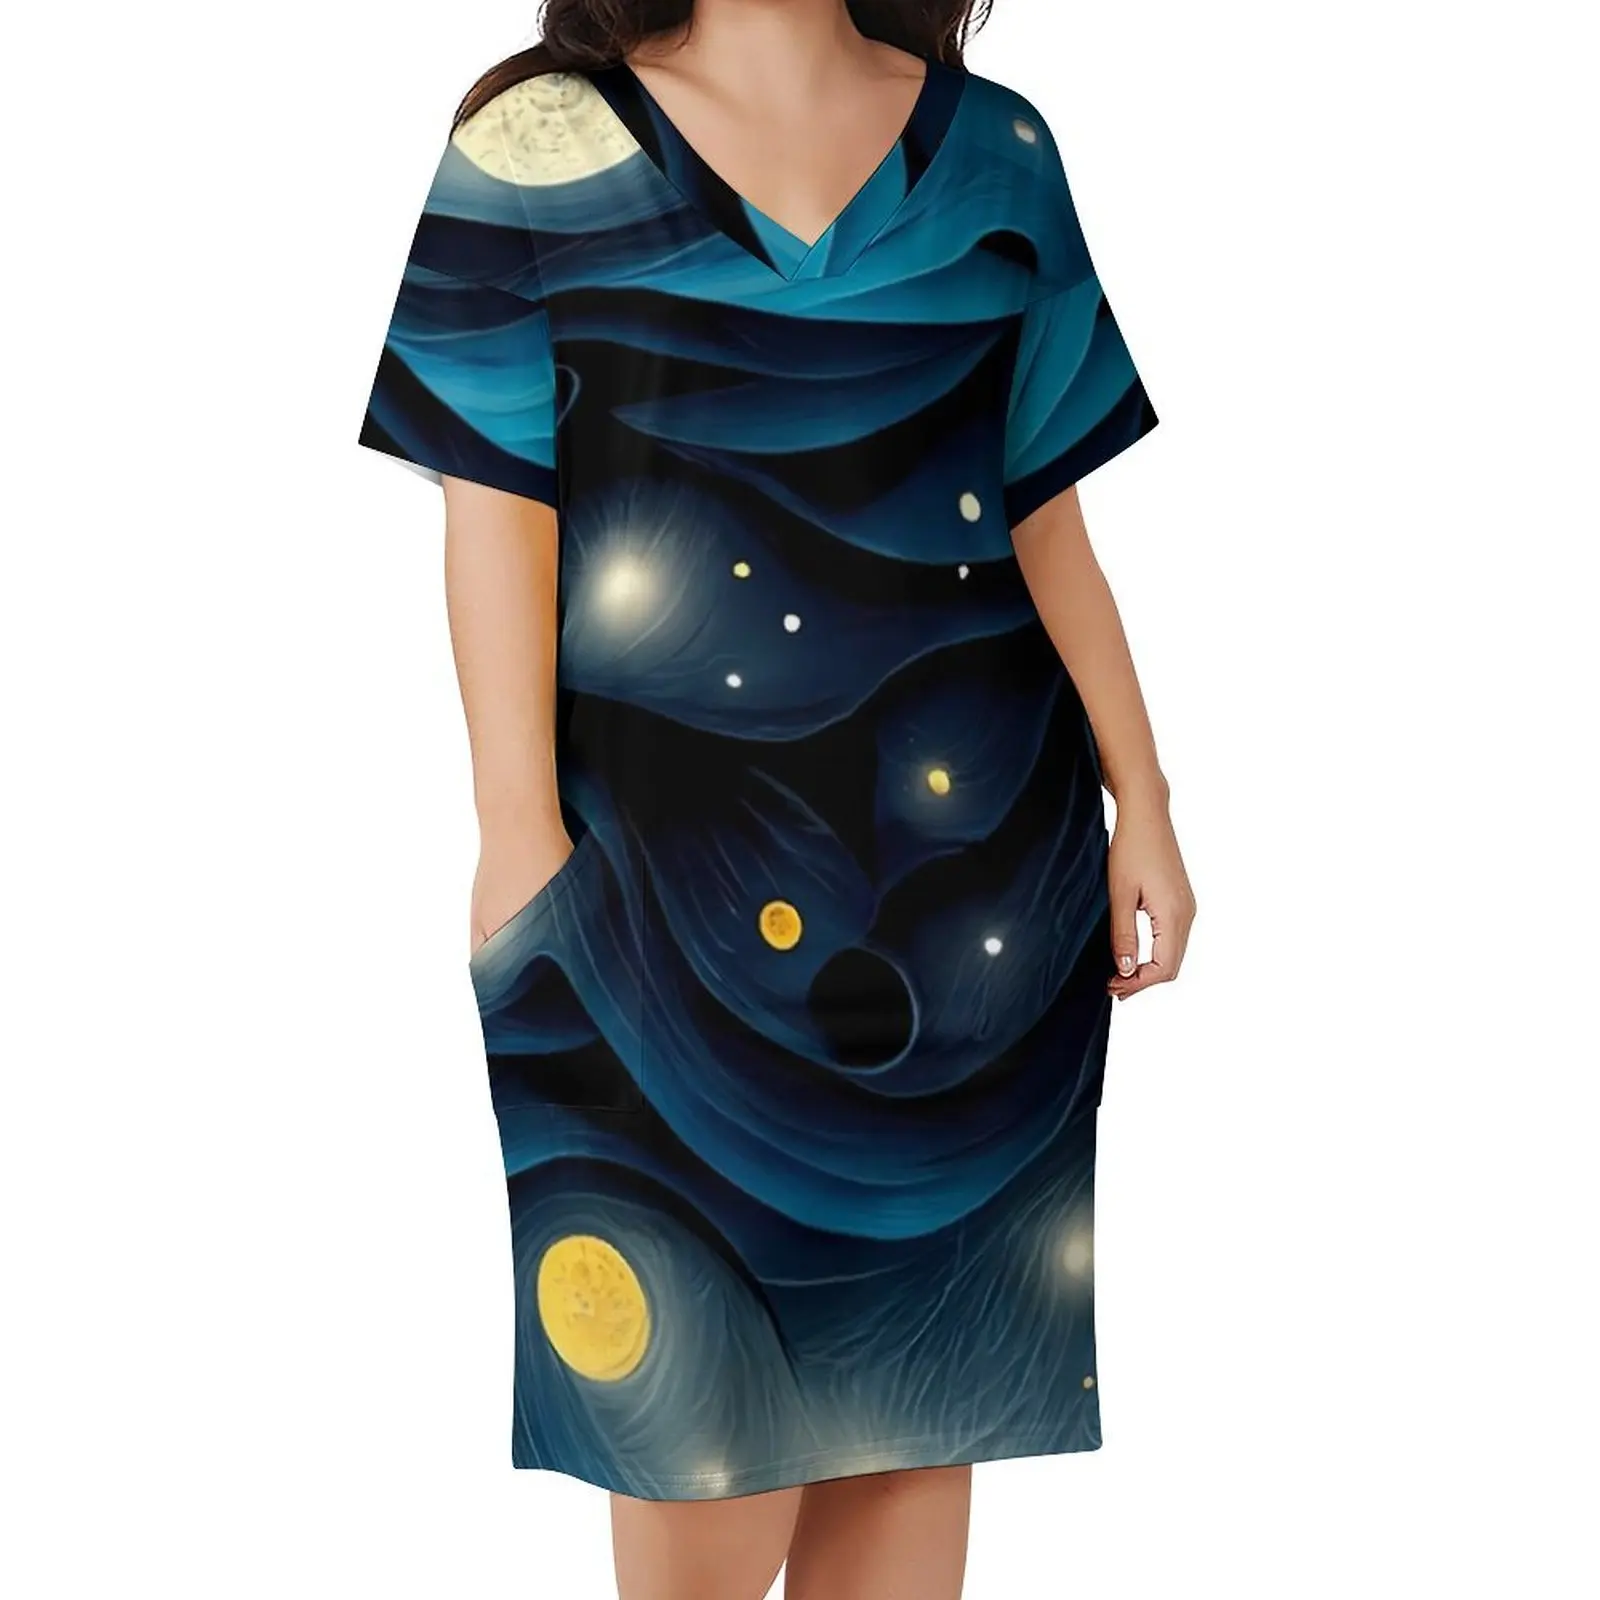 

The Starry Night Dress V Neck Modern Art Print Pretty Dresses Female Aesthetic Design Casual Dress With Pockets Big Size 3XL 4XL